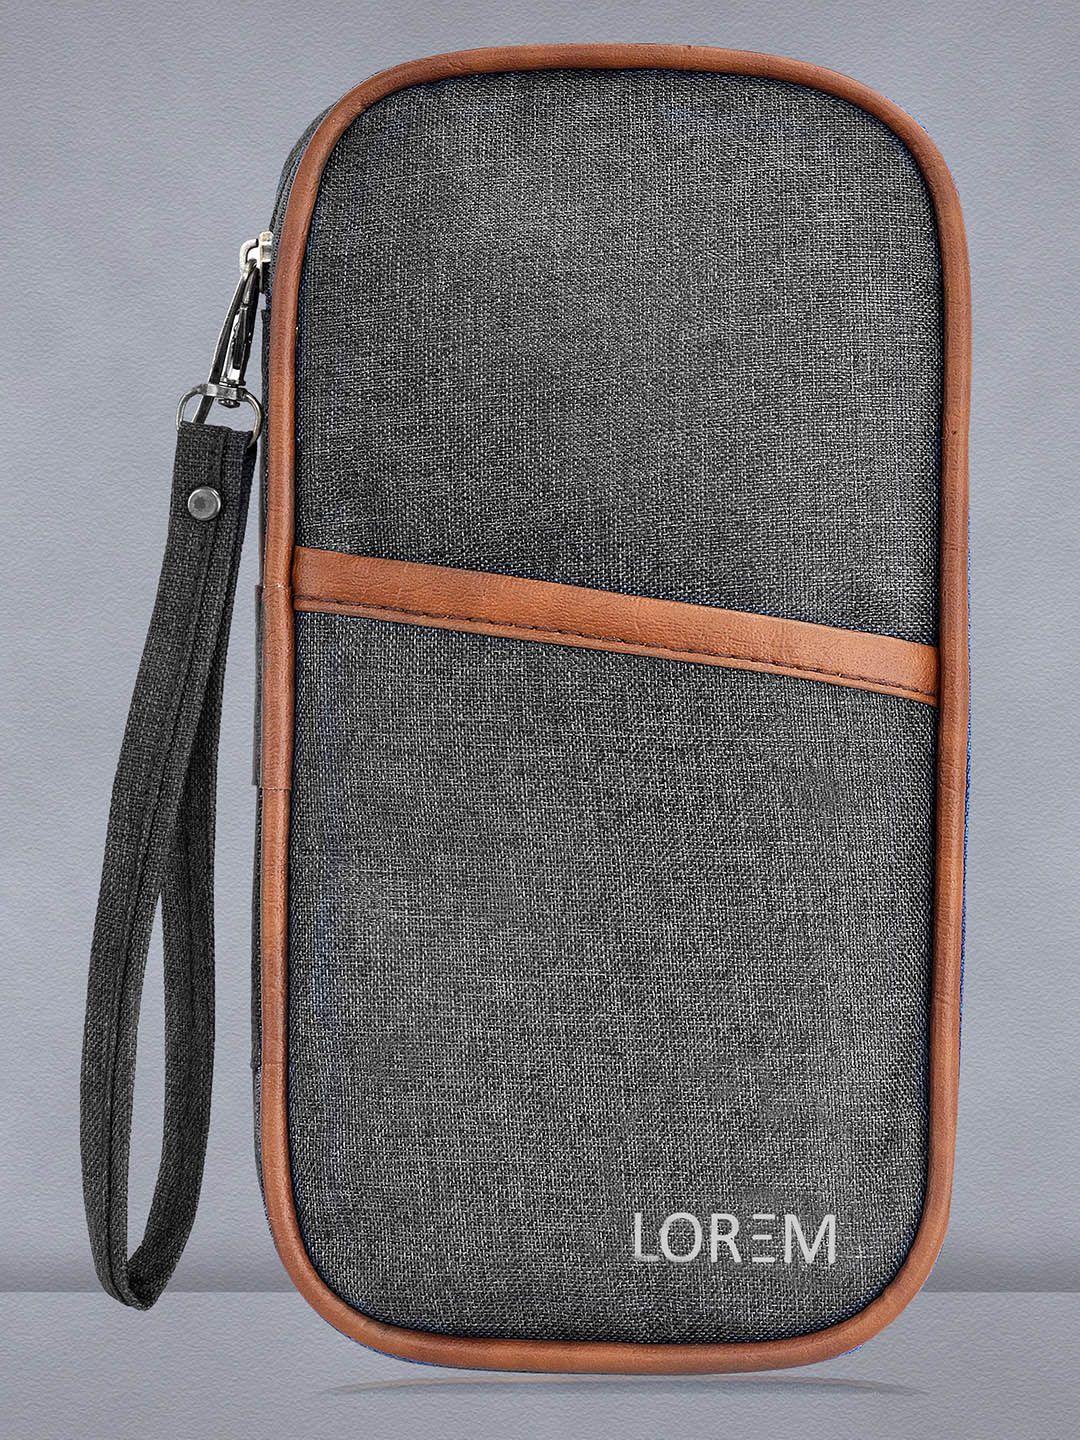 lorem rectangular organizer pouch